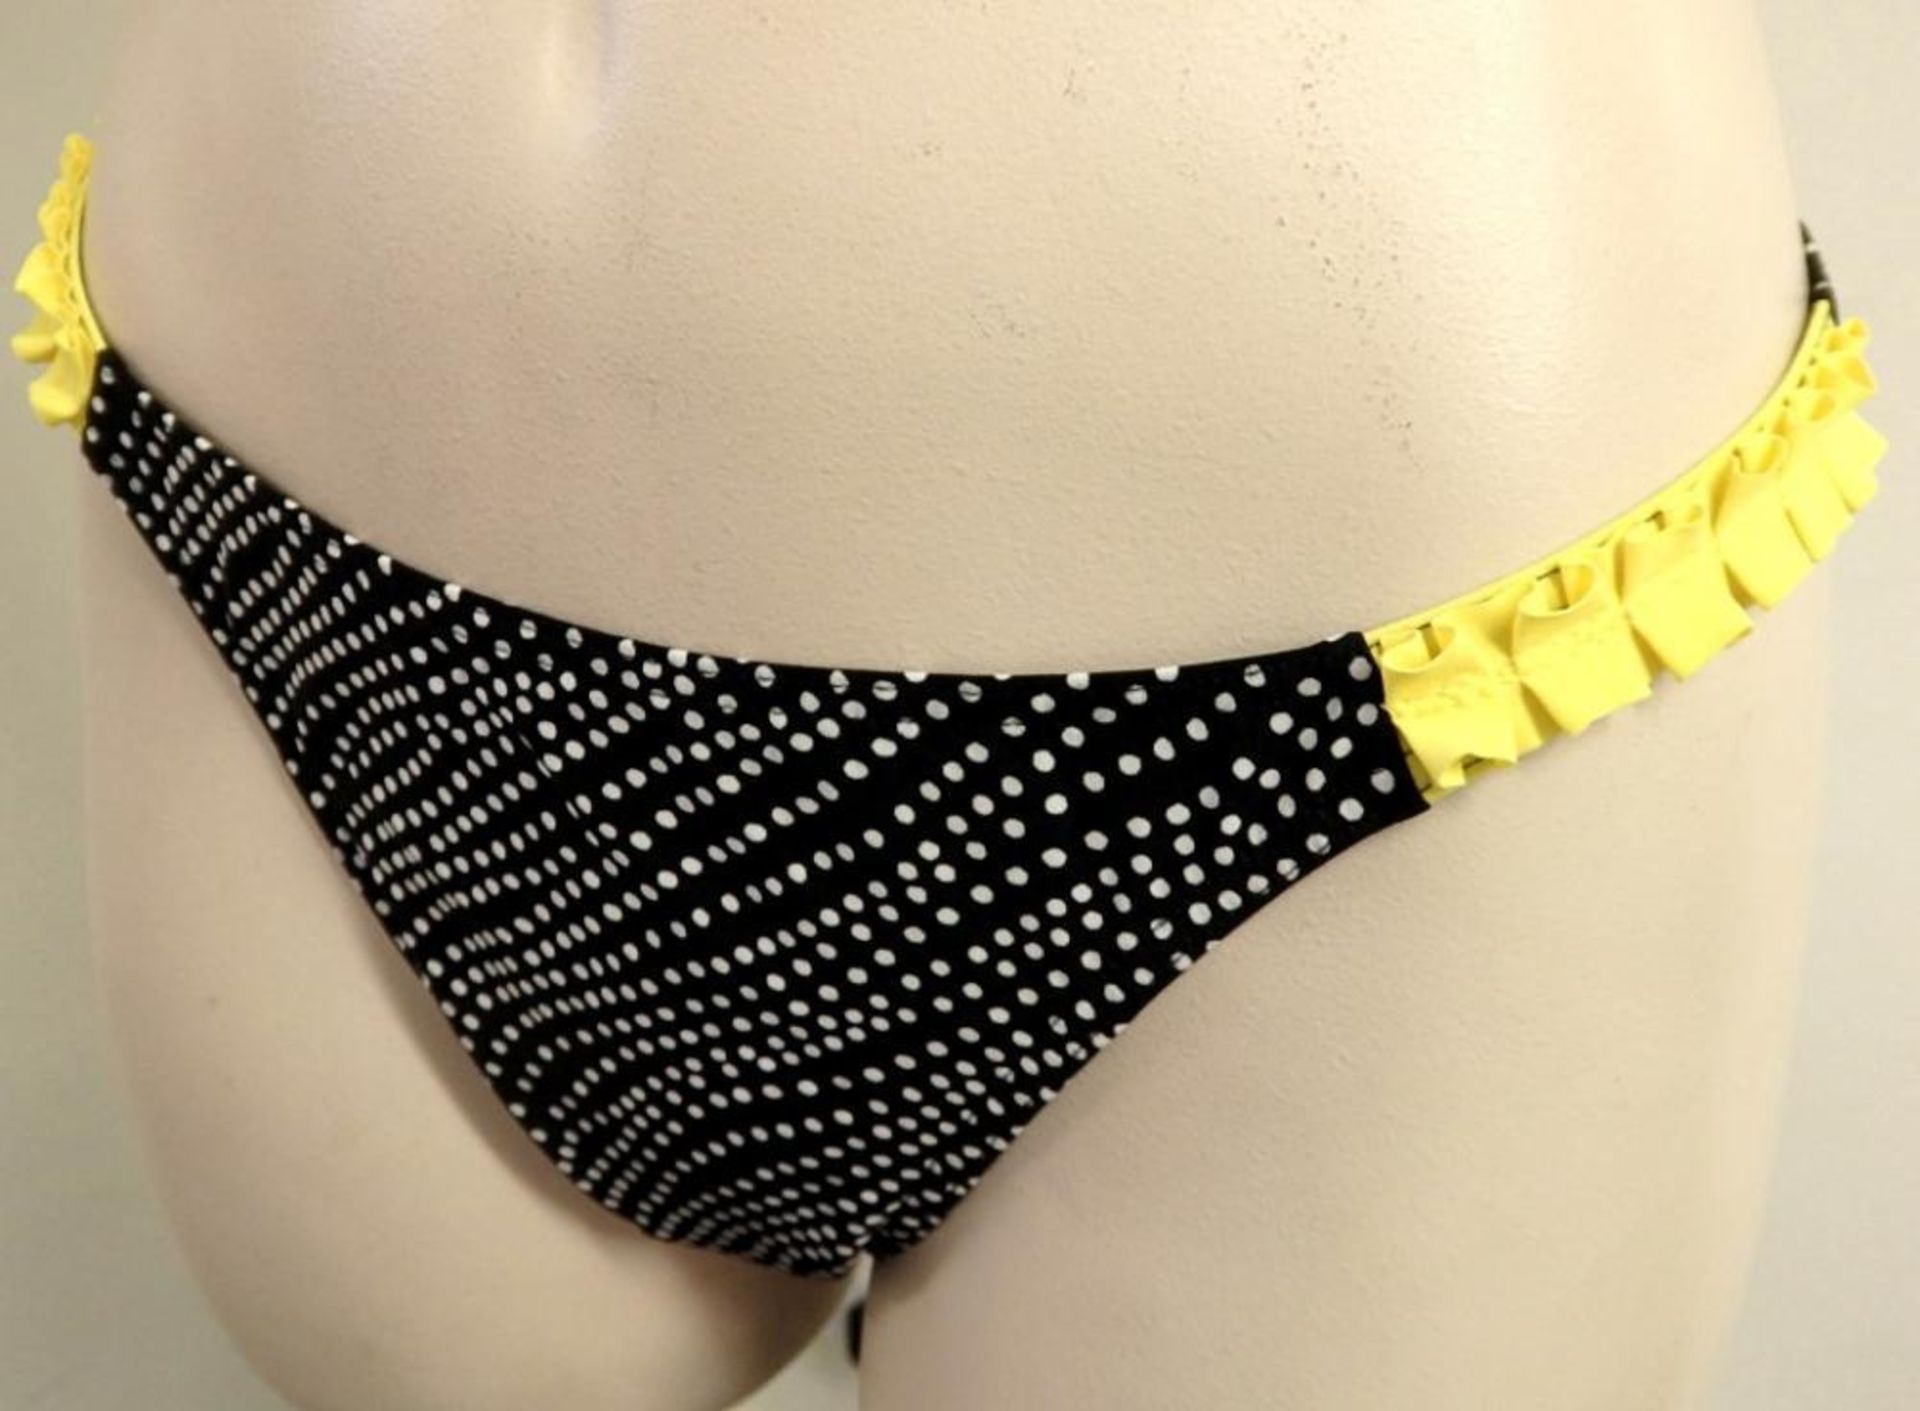 1 x Rasurel - Black Polka dot and Yellow Frill Gold Bikini - R21061 Touquet -Shorty - Size 2 - UK 32 - Image 2 of 9